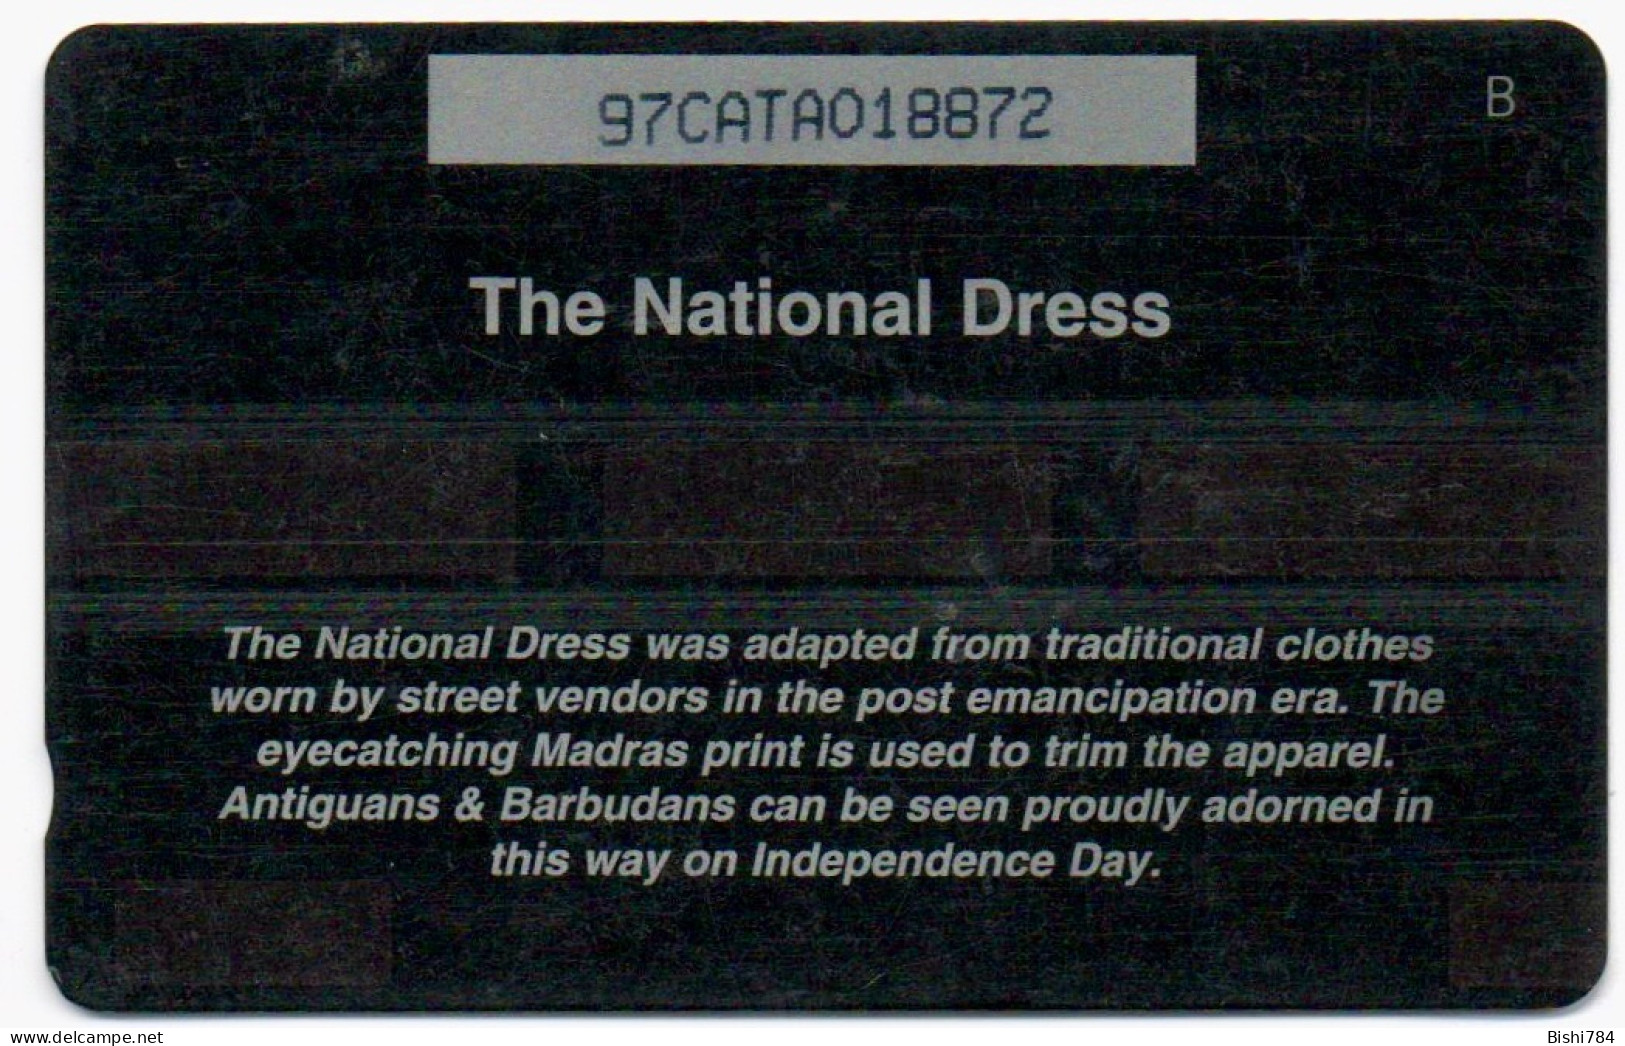 Antigua & Barbuda - The National Dress - 97CATA (regualr 0) - Antigua And Barbuda